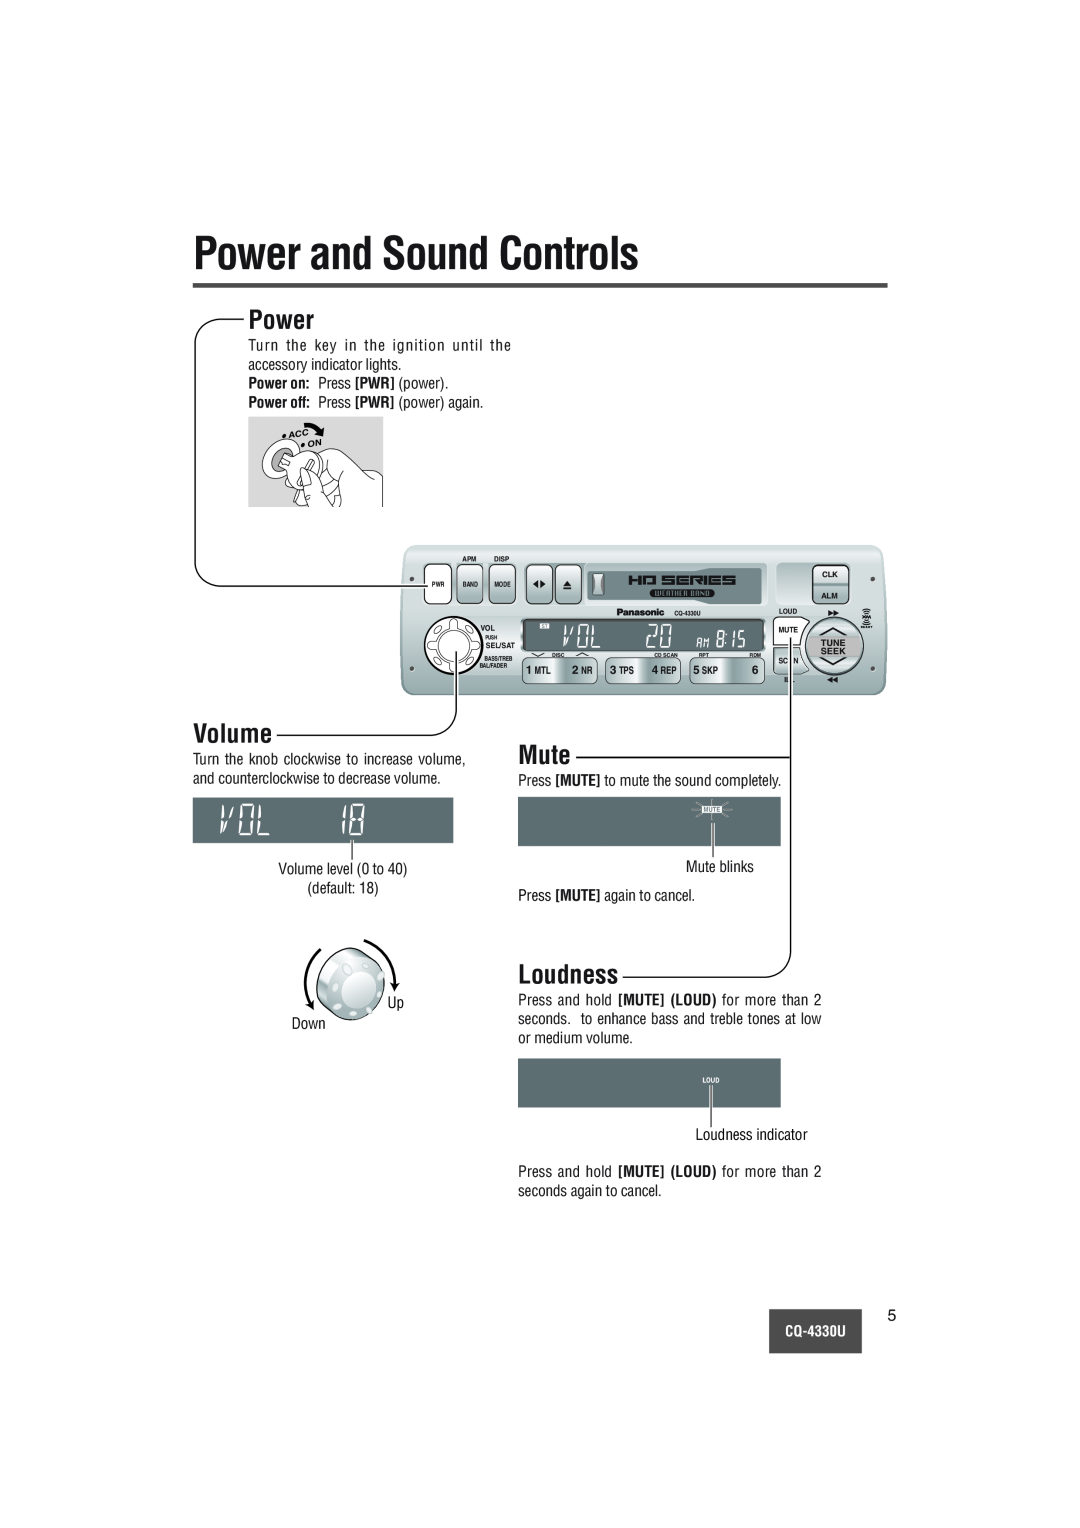 Panasonic CQ-4330U manual Power and Sound Controls, Volume, Mute, Loudness, Power on Press PWR power 